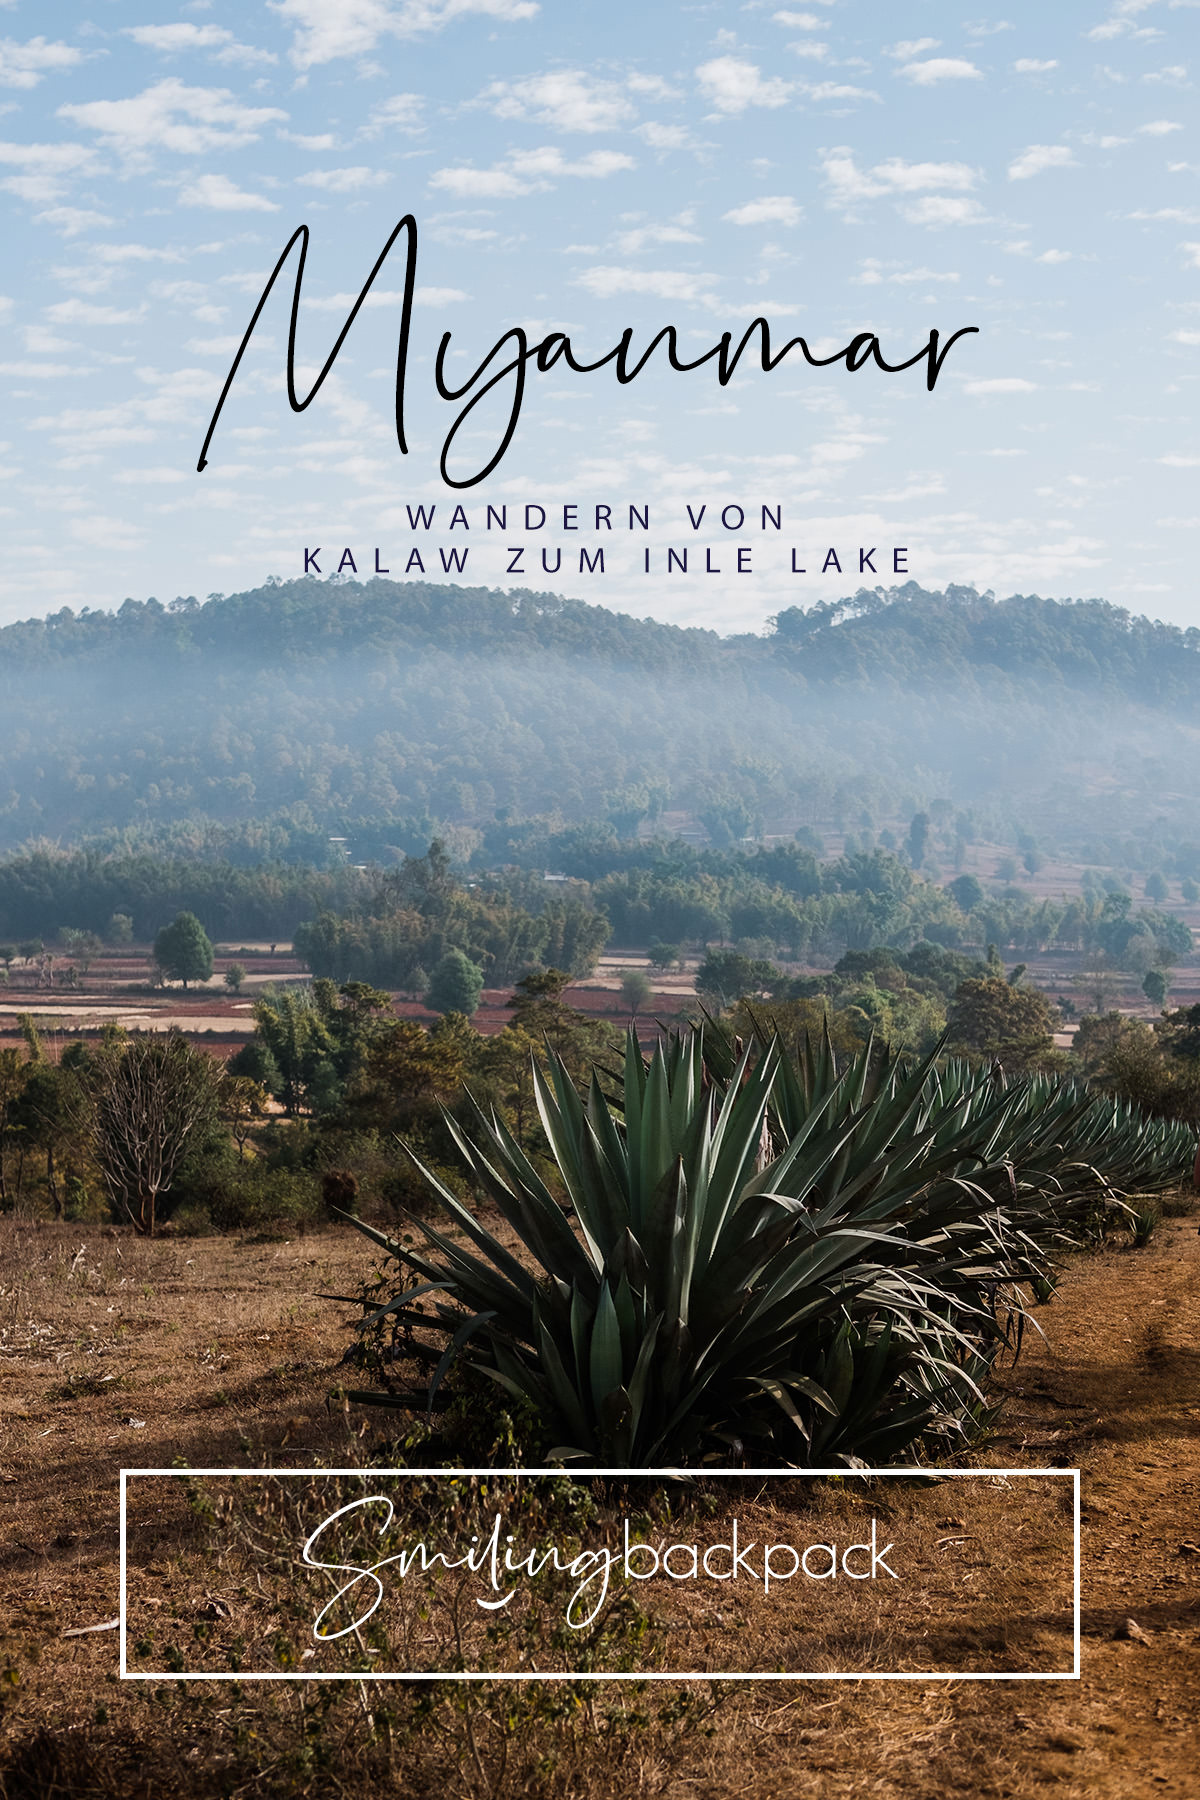 Wandern in Myanmar